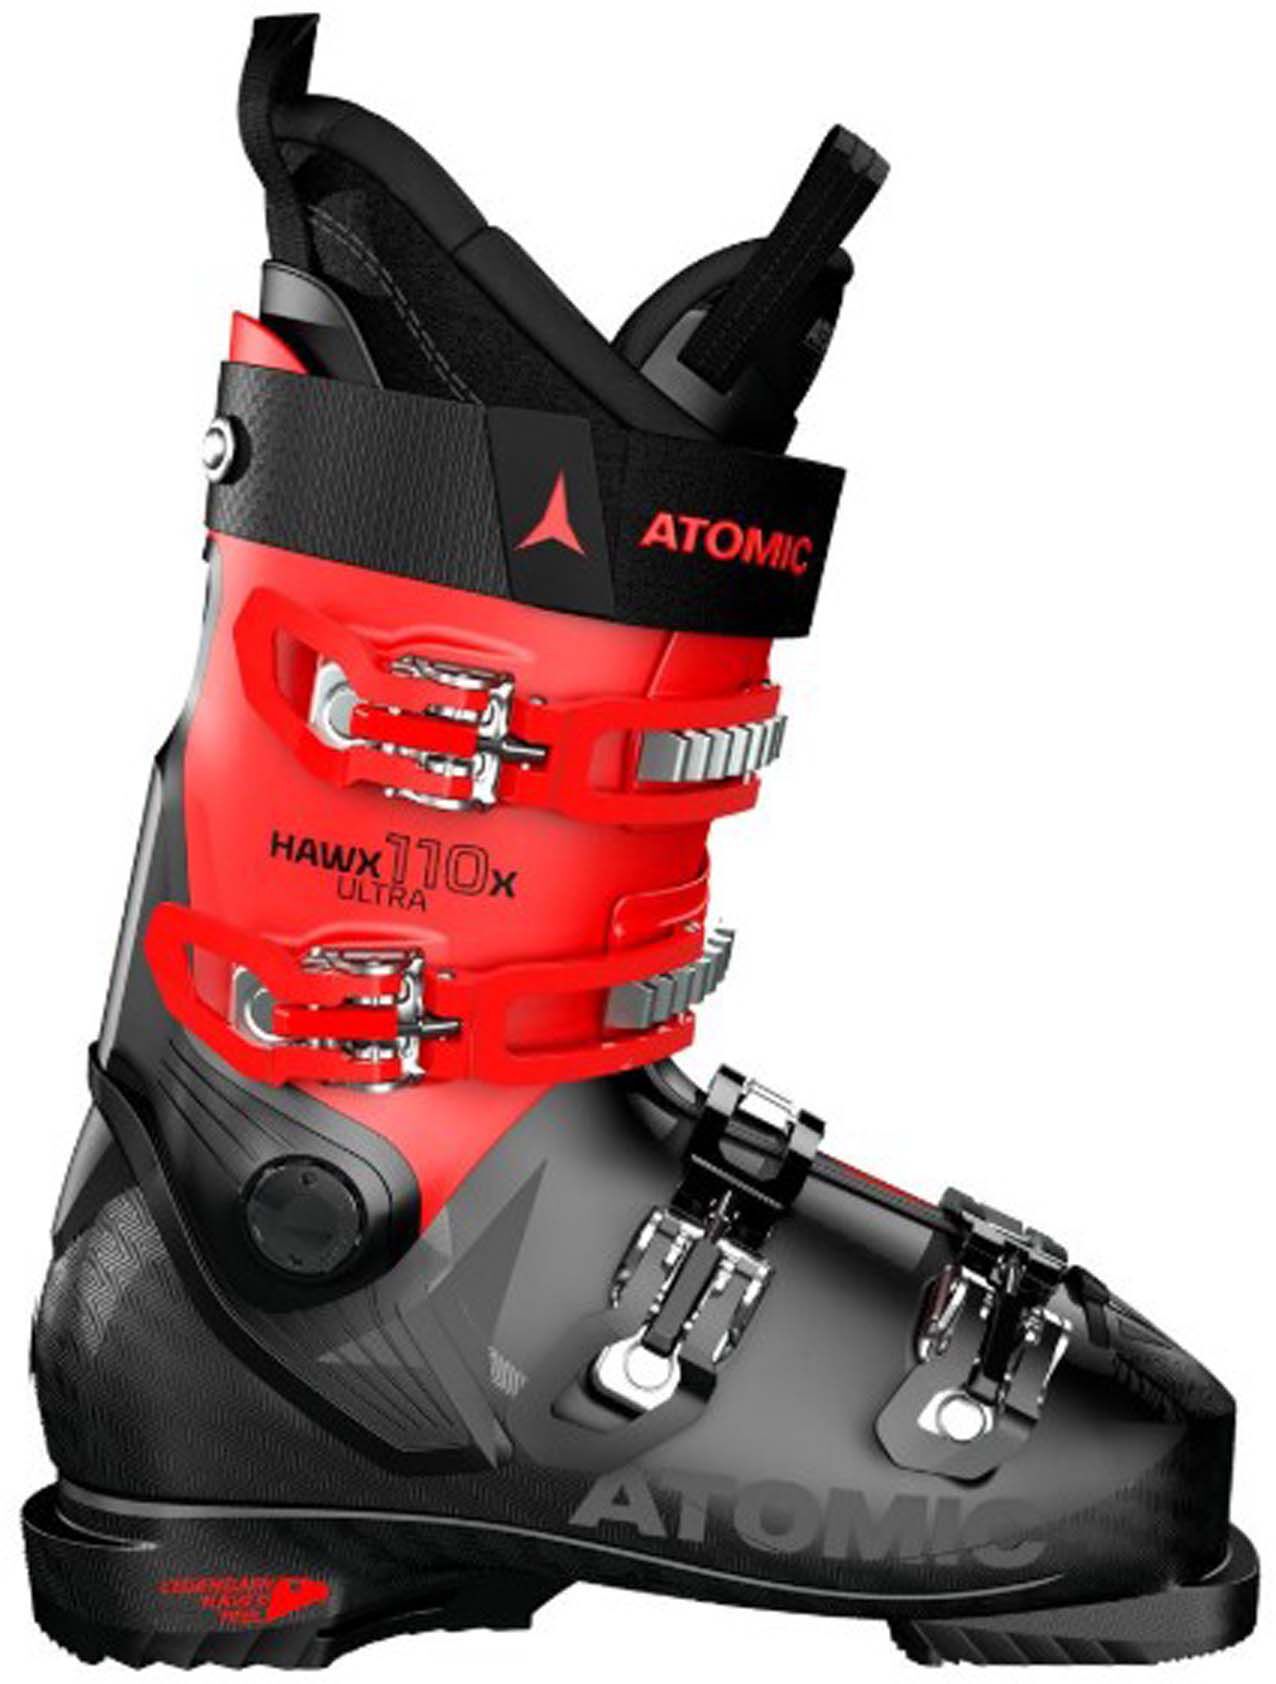 ATOMIC Hawx Ultra 110 X skischoenen 